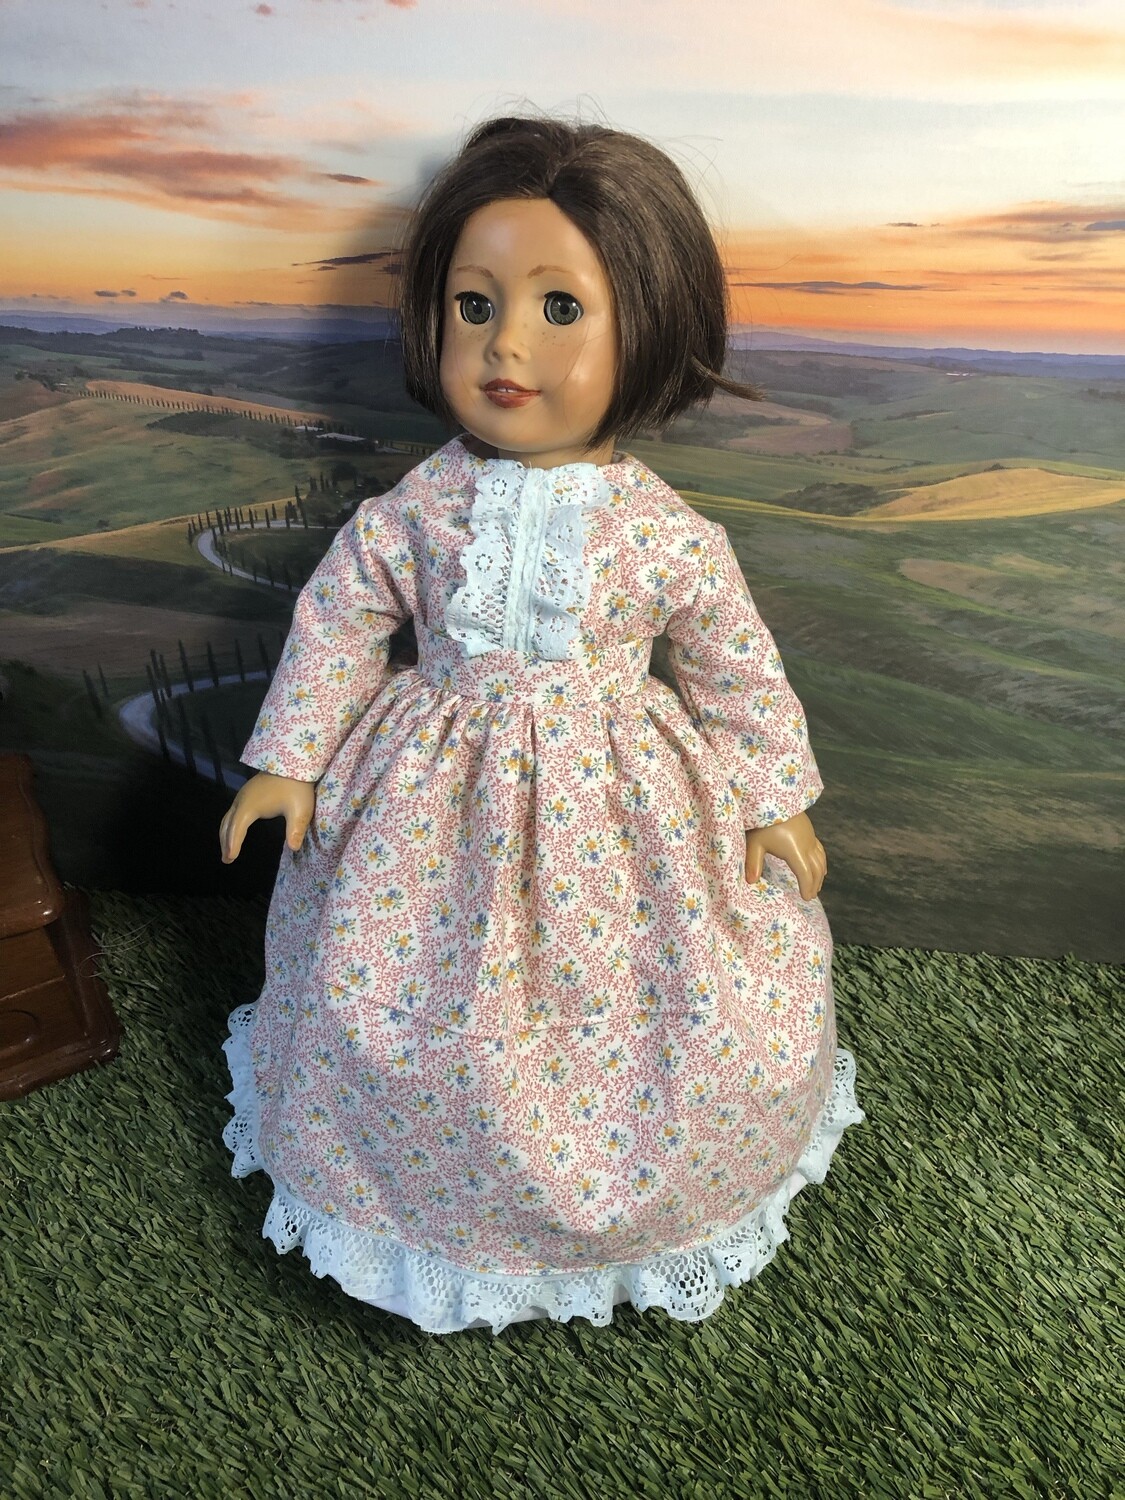 Historically inspired rose vintage print doll dress